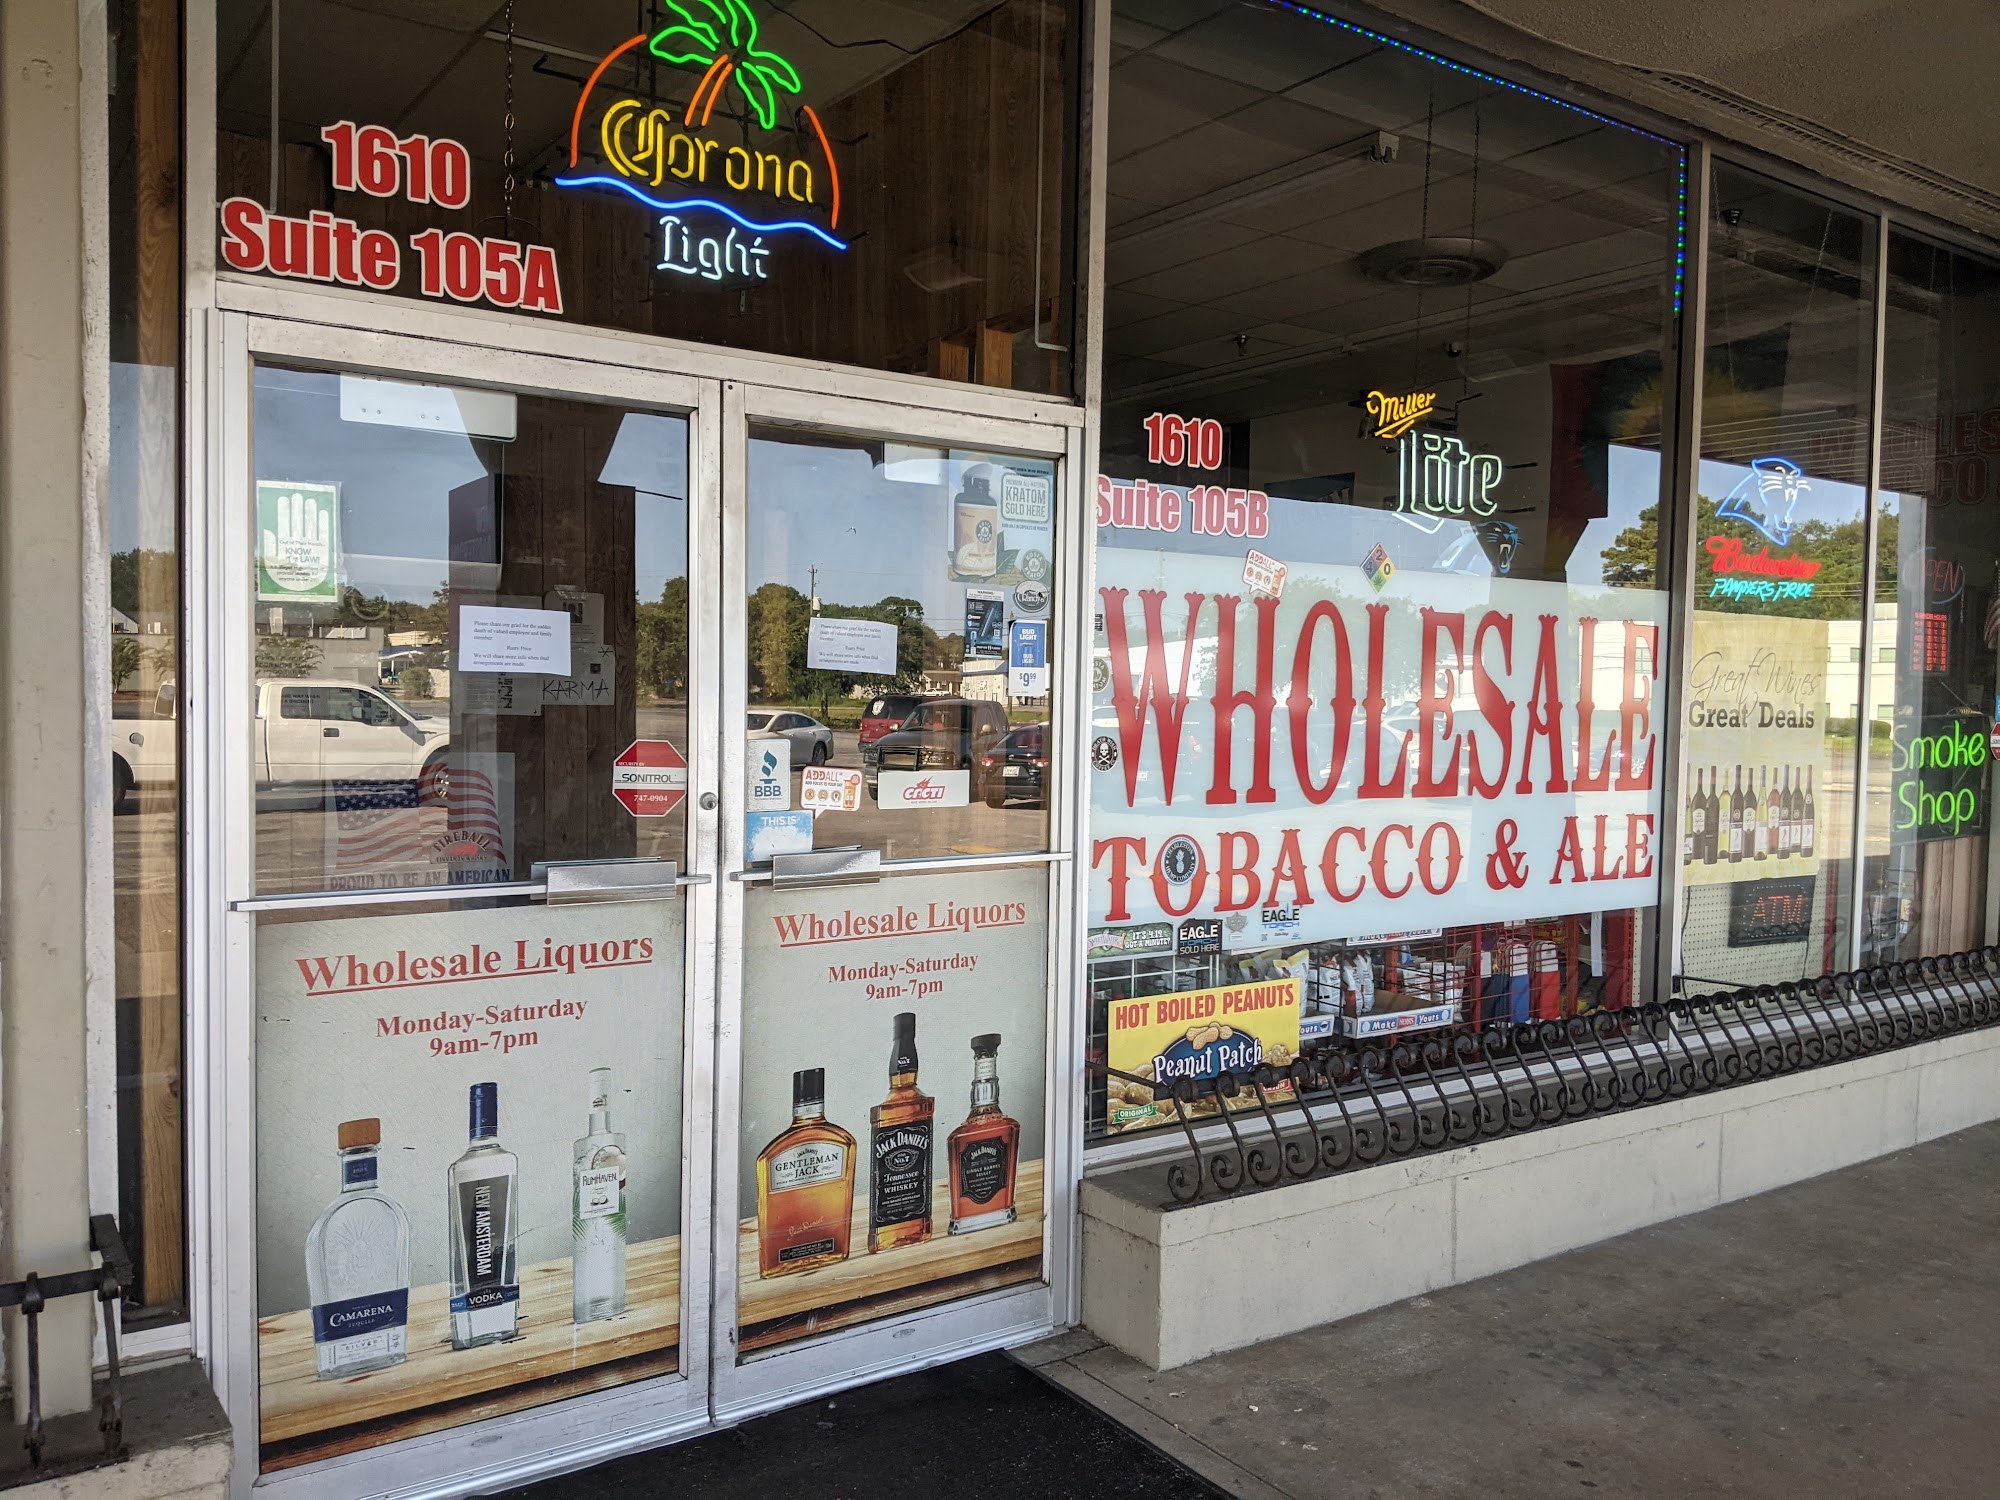 Wholesale Tobacco & Ale